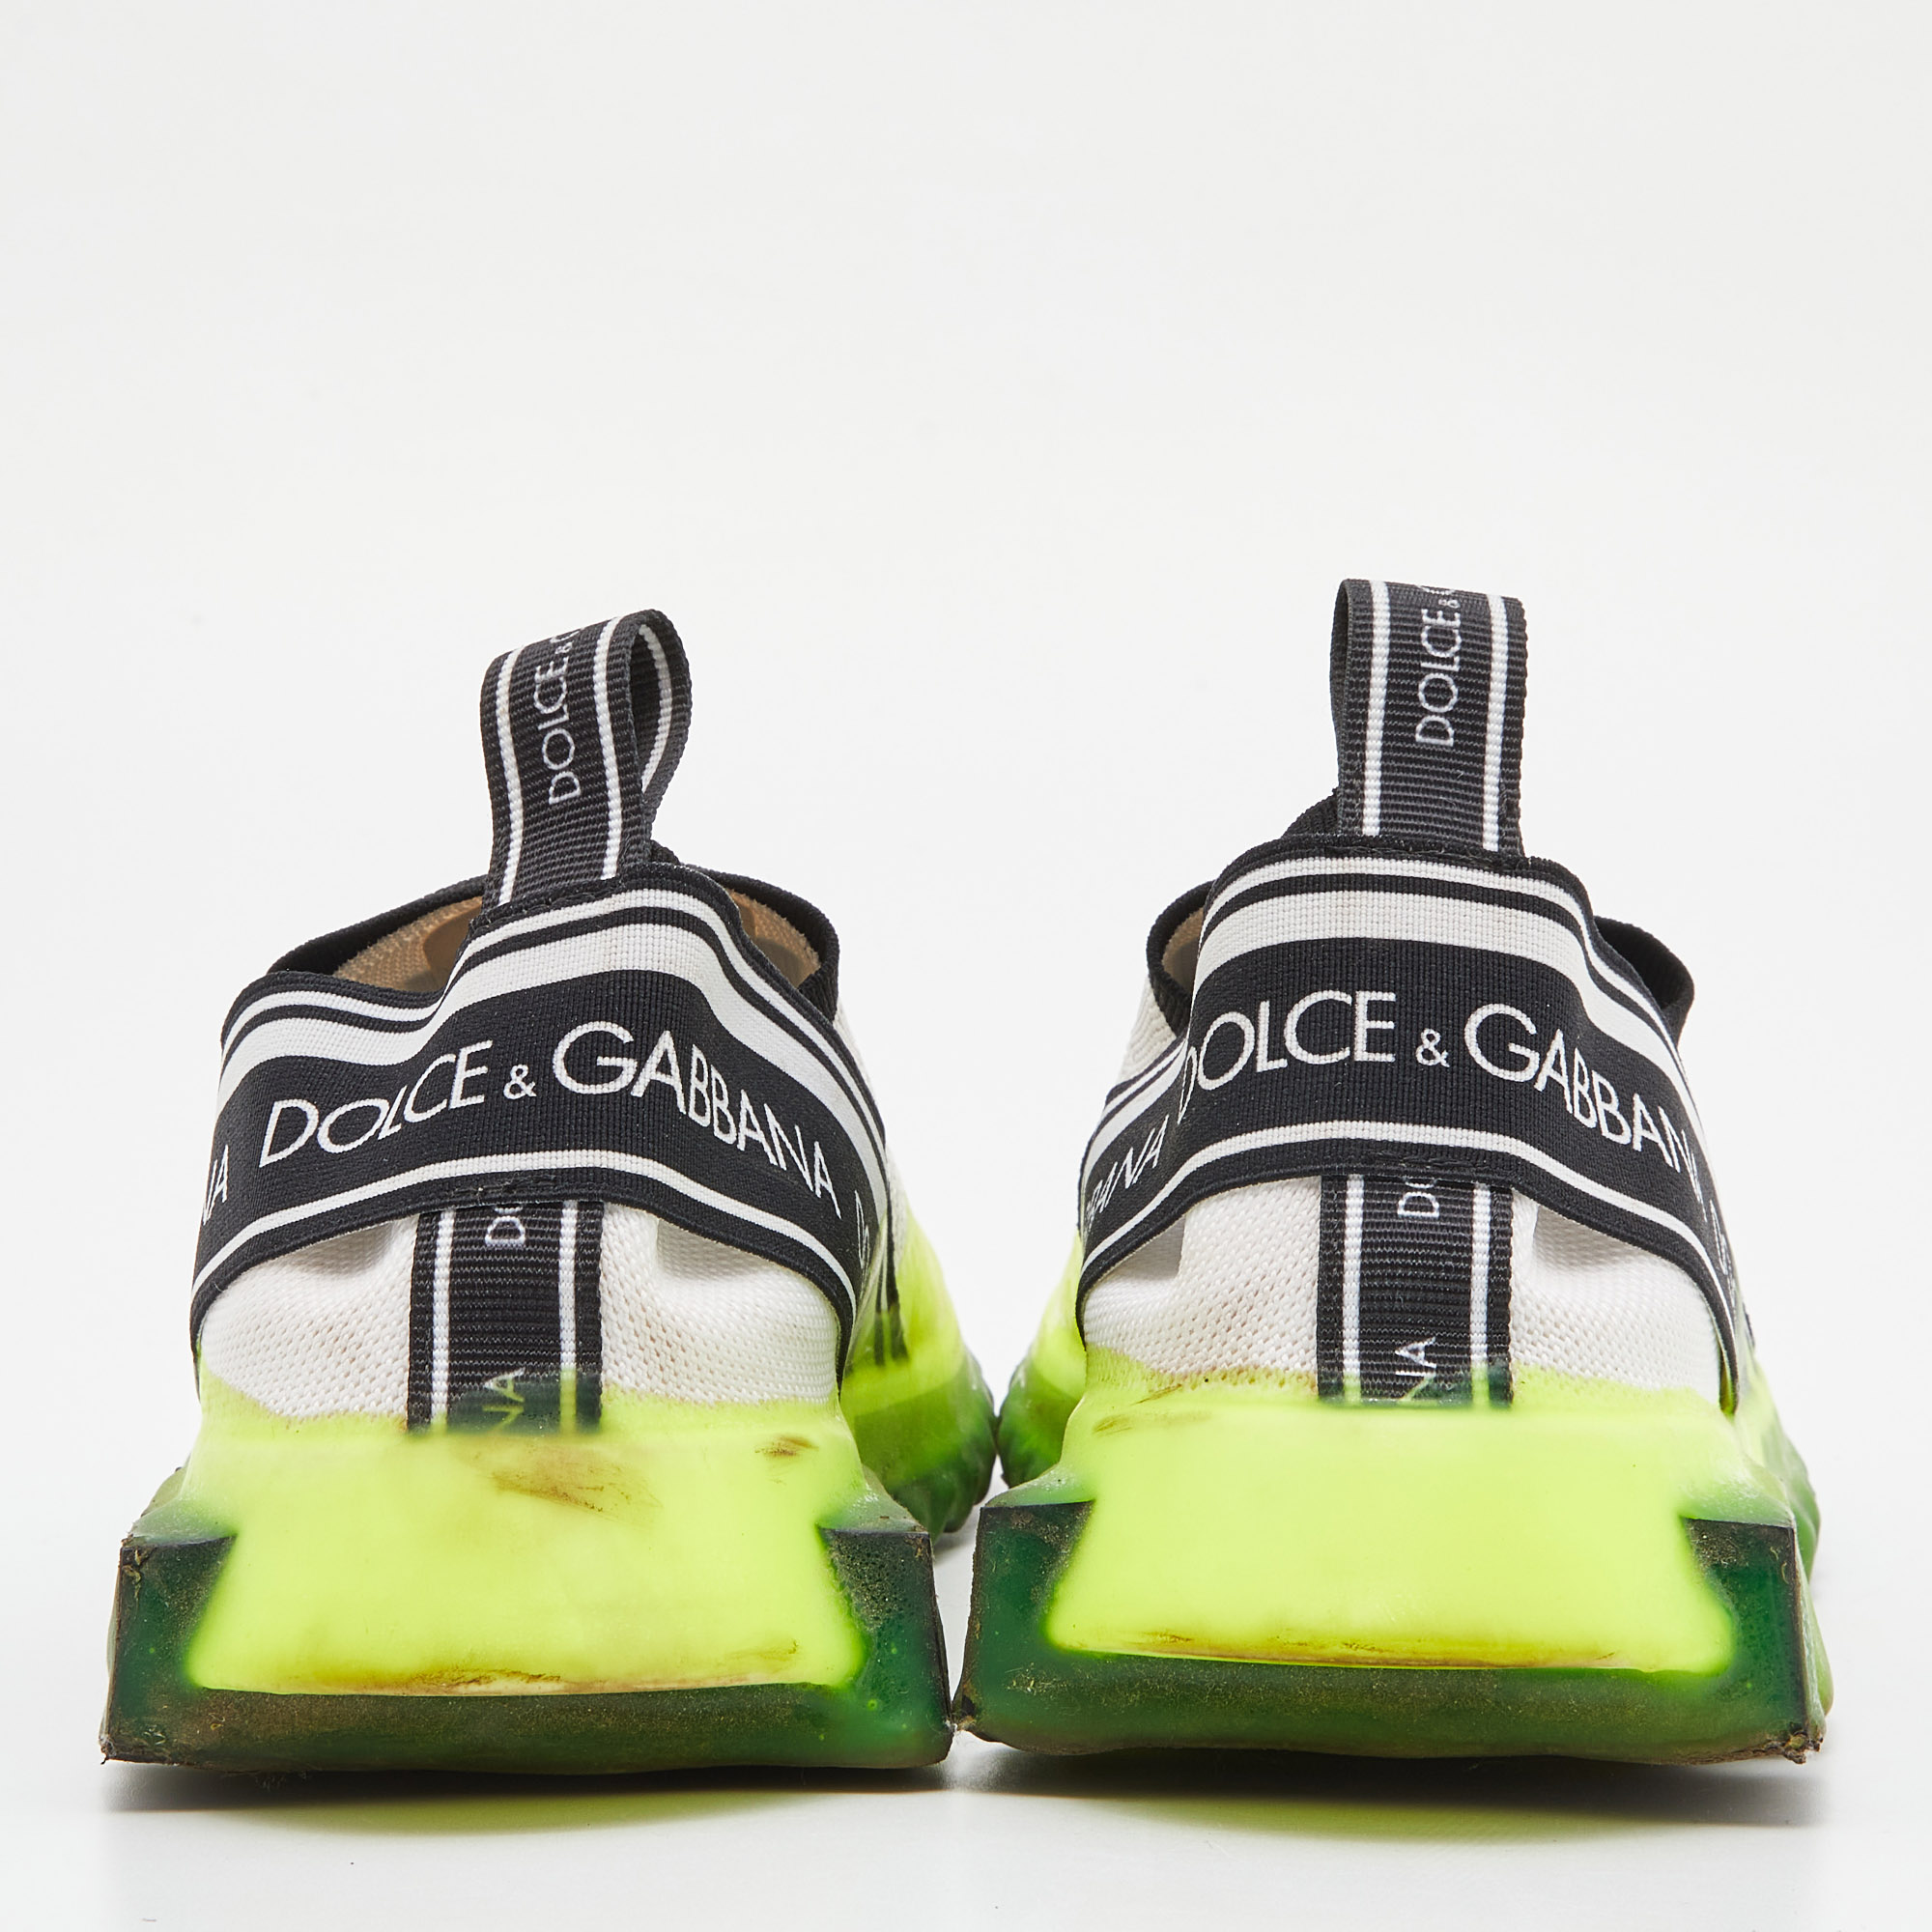 Dolce & Gabbana Neon Green/White Knit Fabric Sorrento Slip On Sneakers Size 38